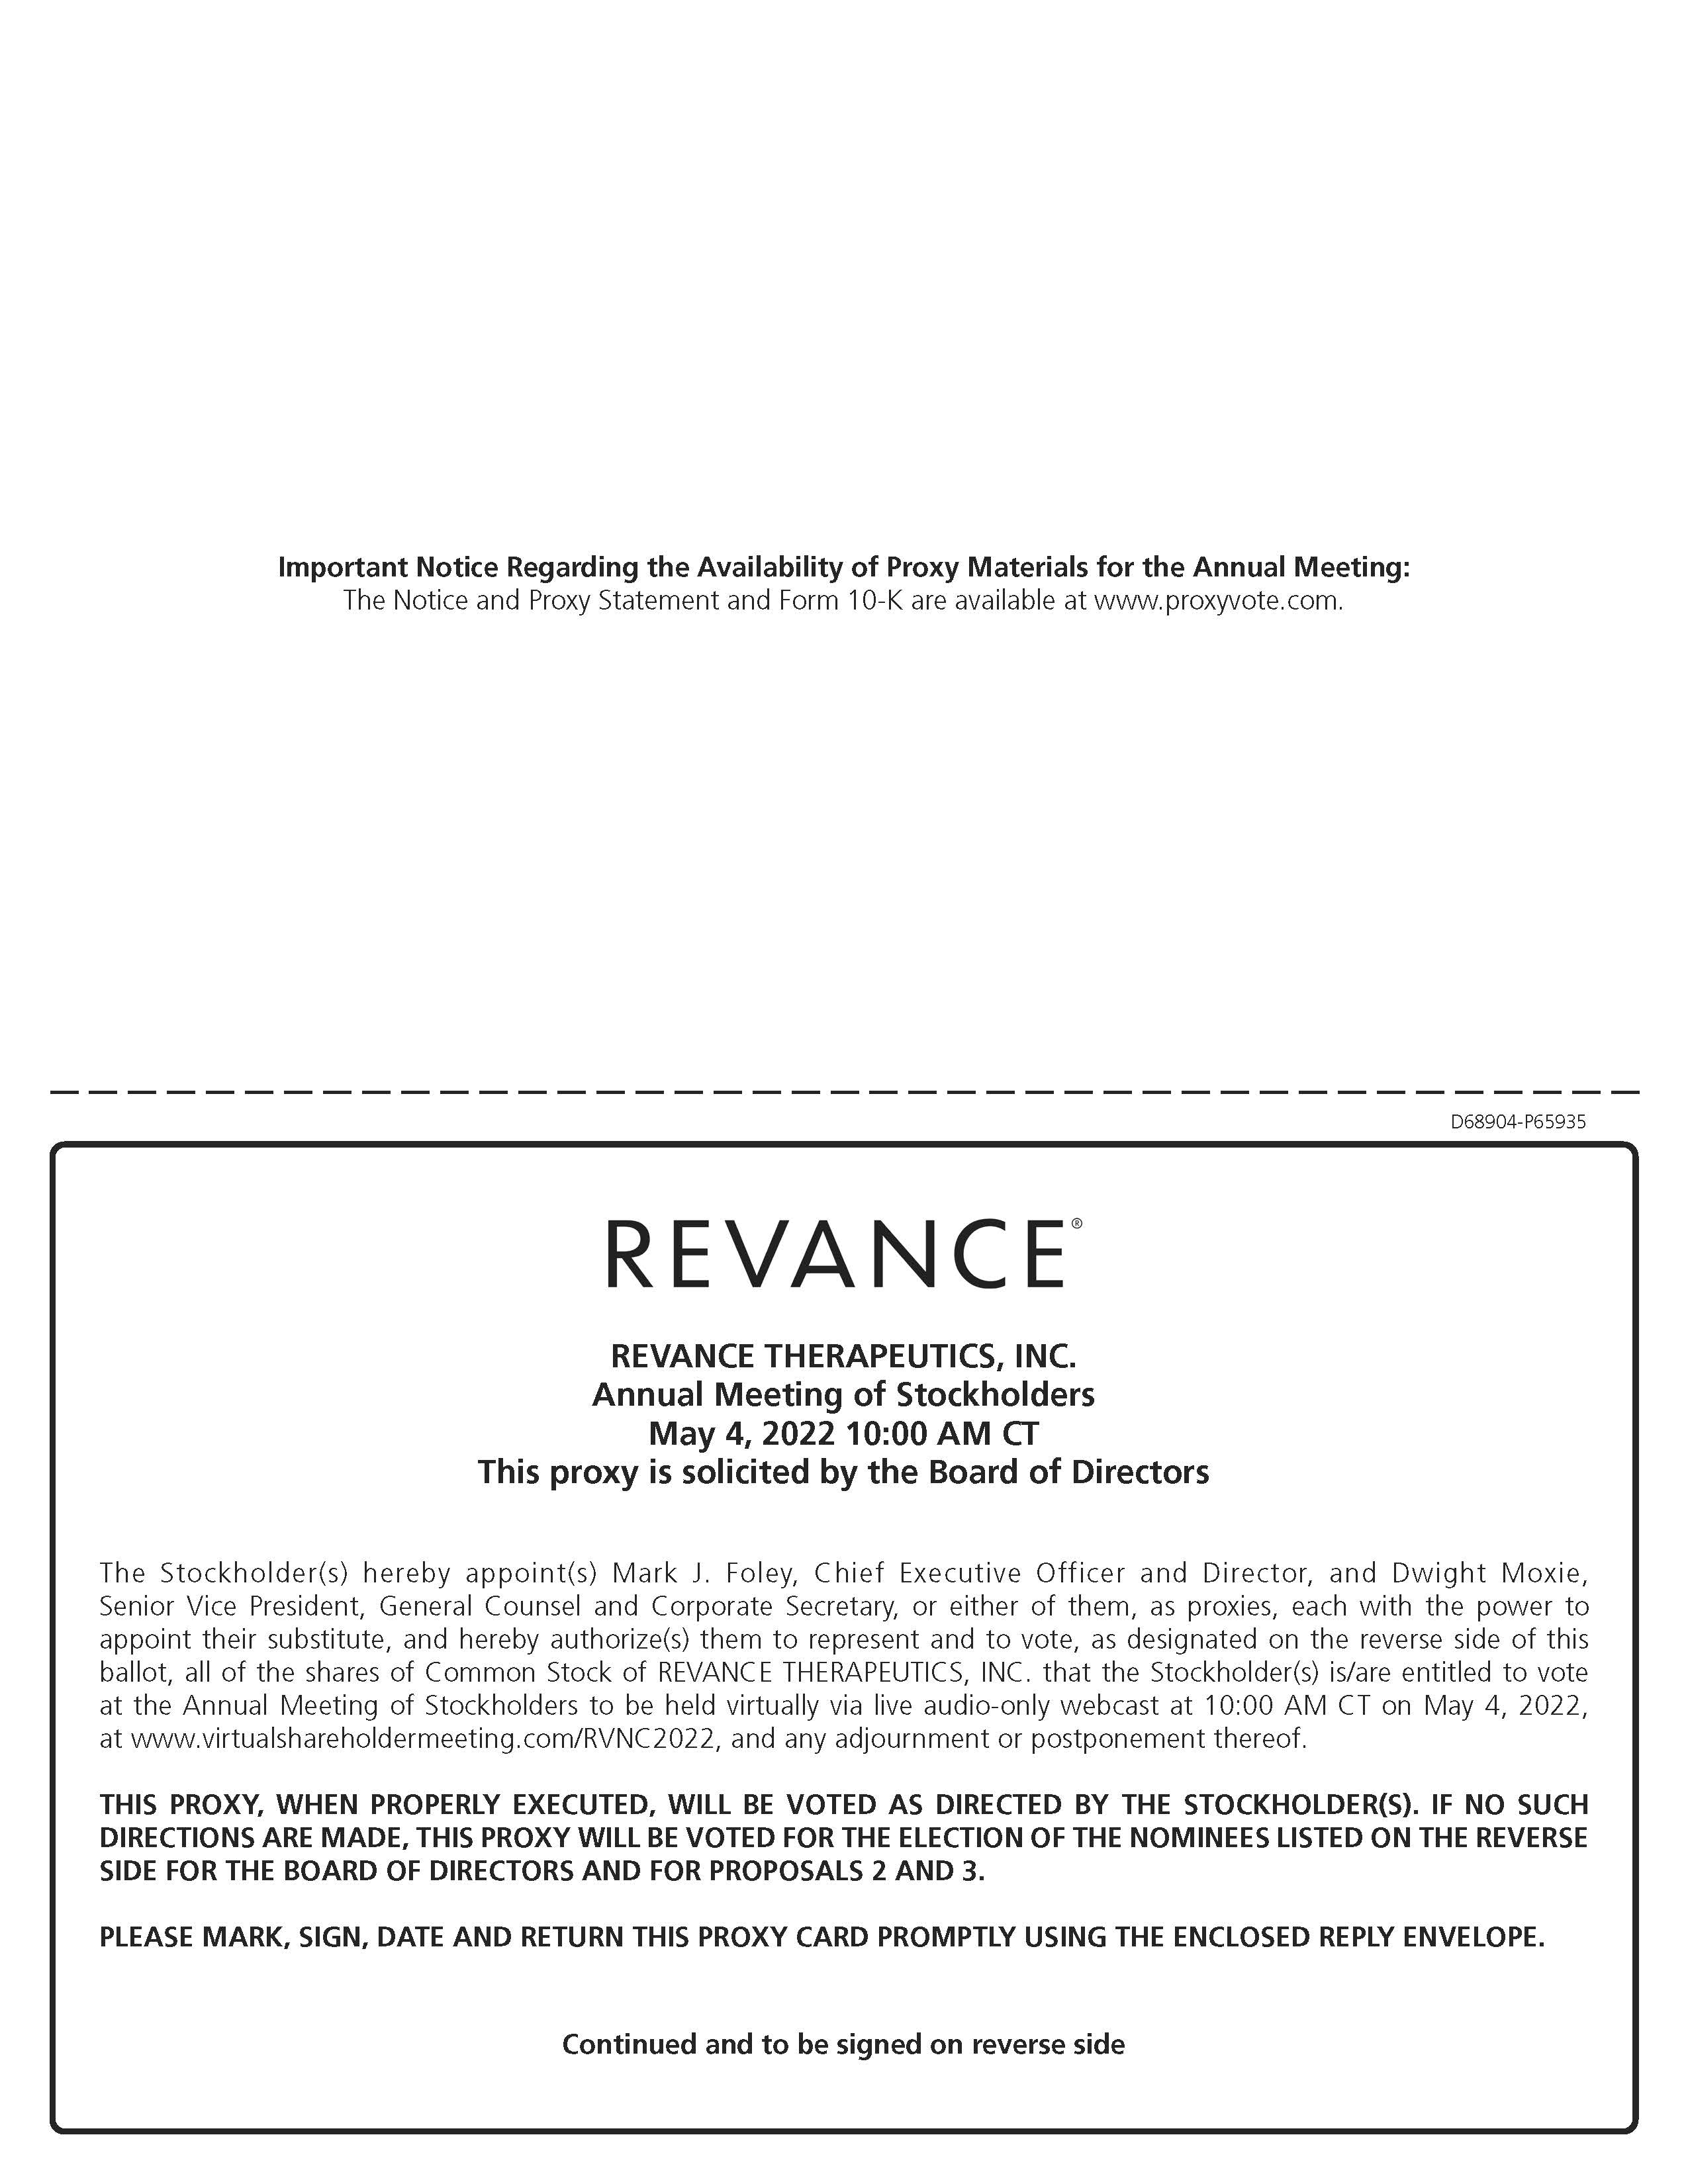 revancetherapeuticsinc_vsma.jpg